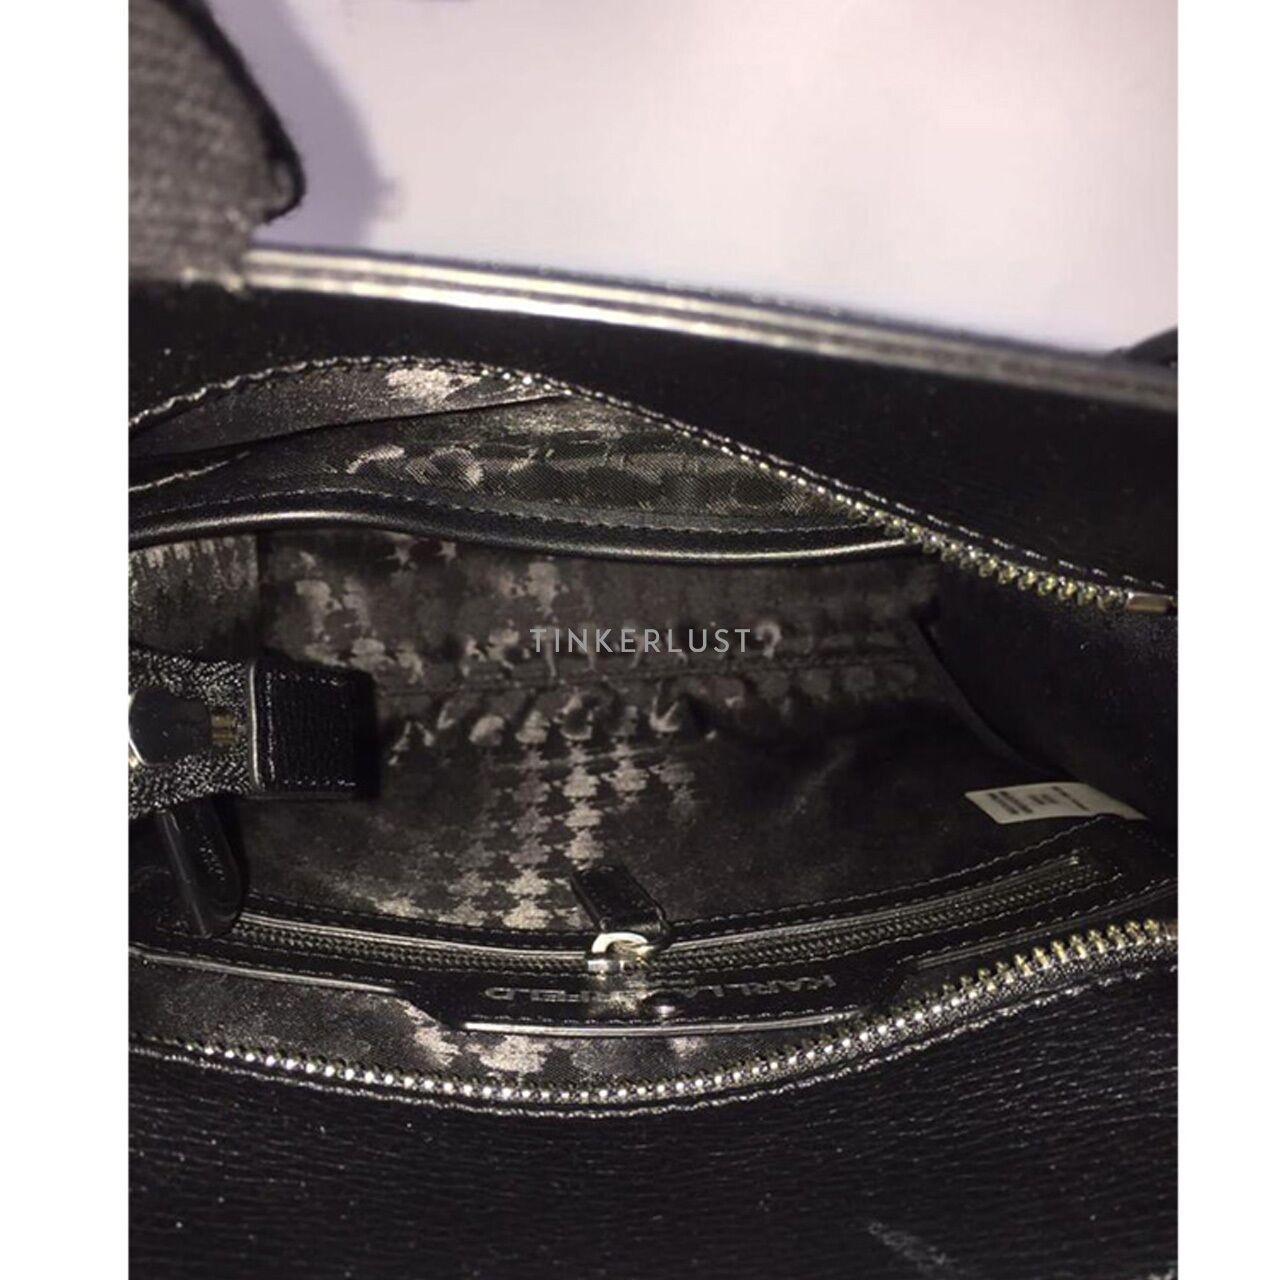 Karl Lagerfeld Black Tote Logo Bag with Strap Satchel